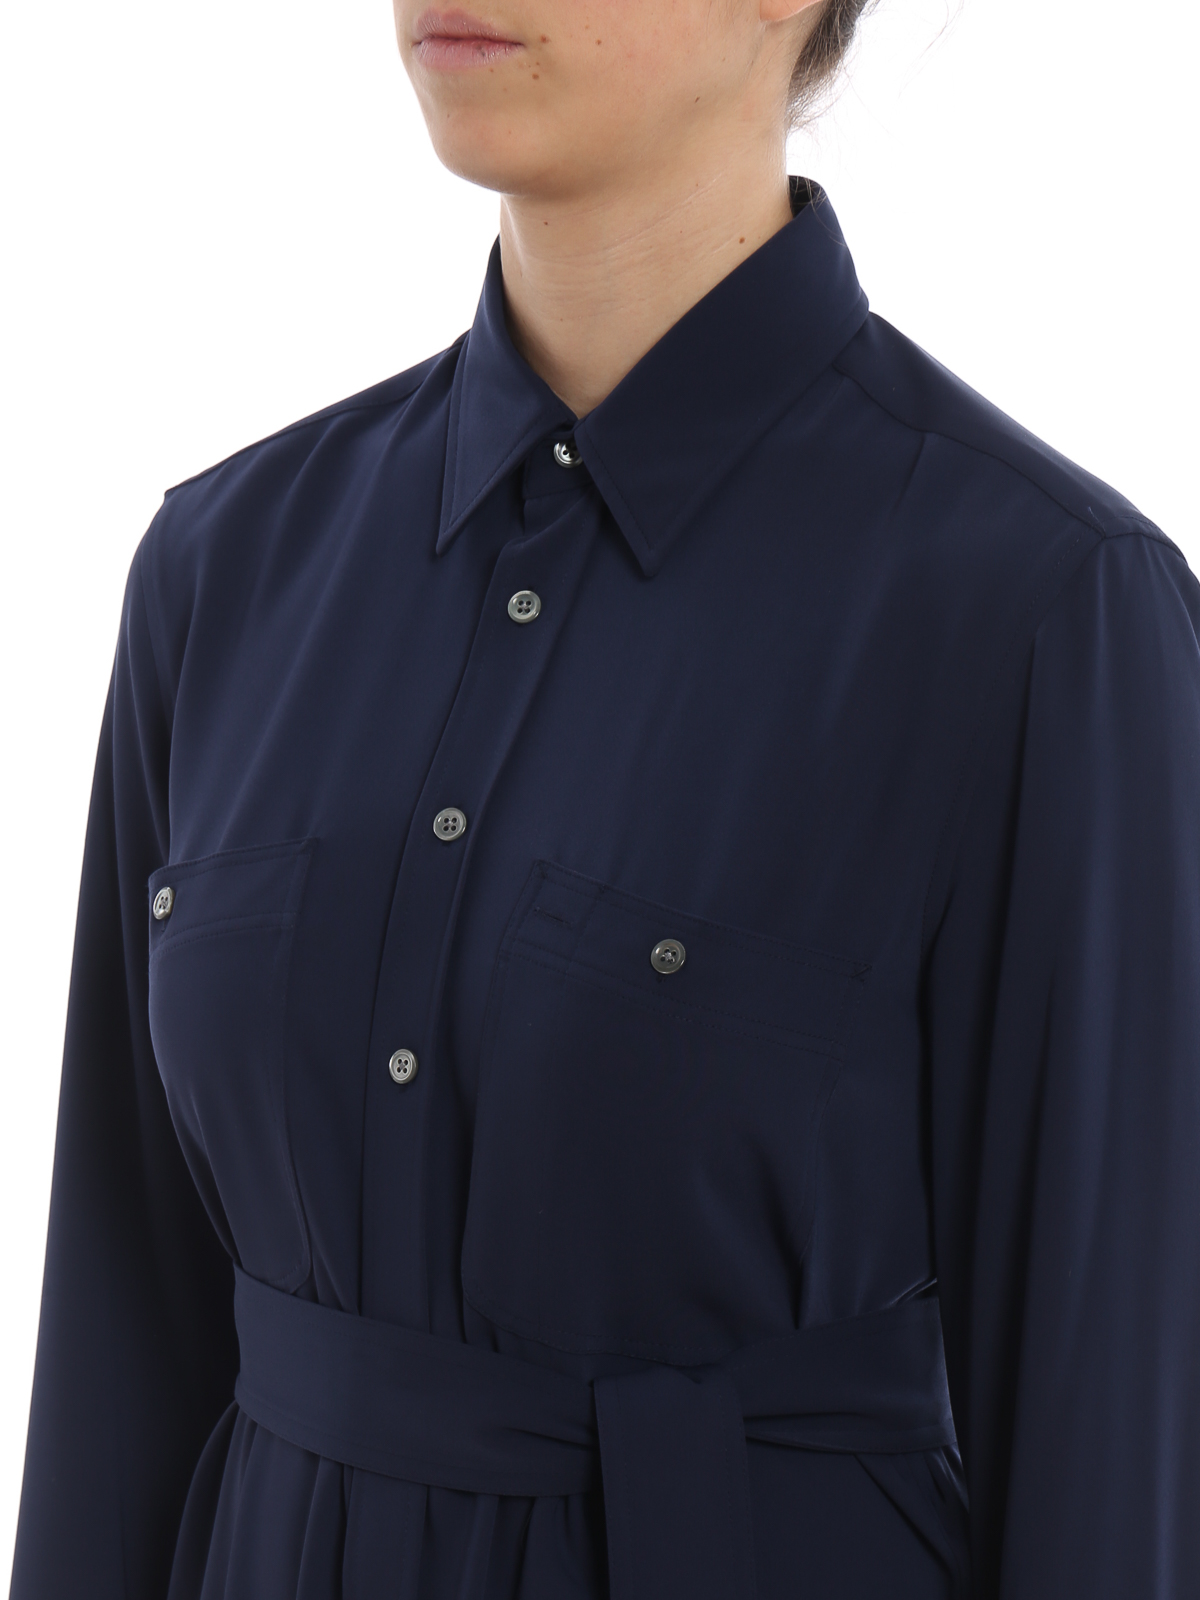 Polo Ralph Lauren Shirt Dresses for Women for sale